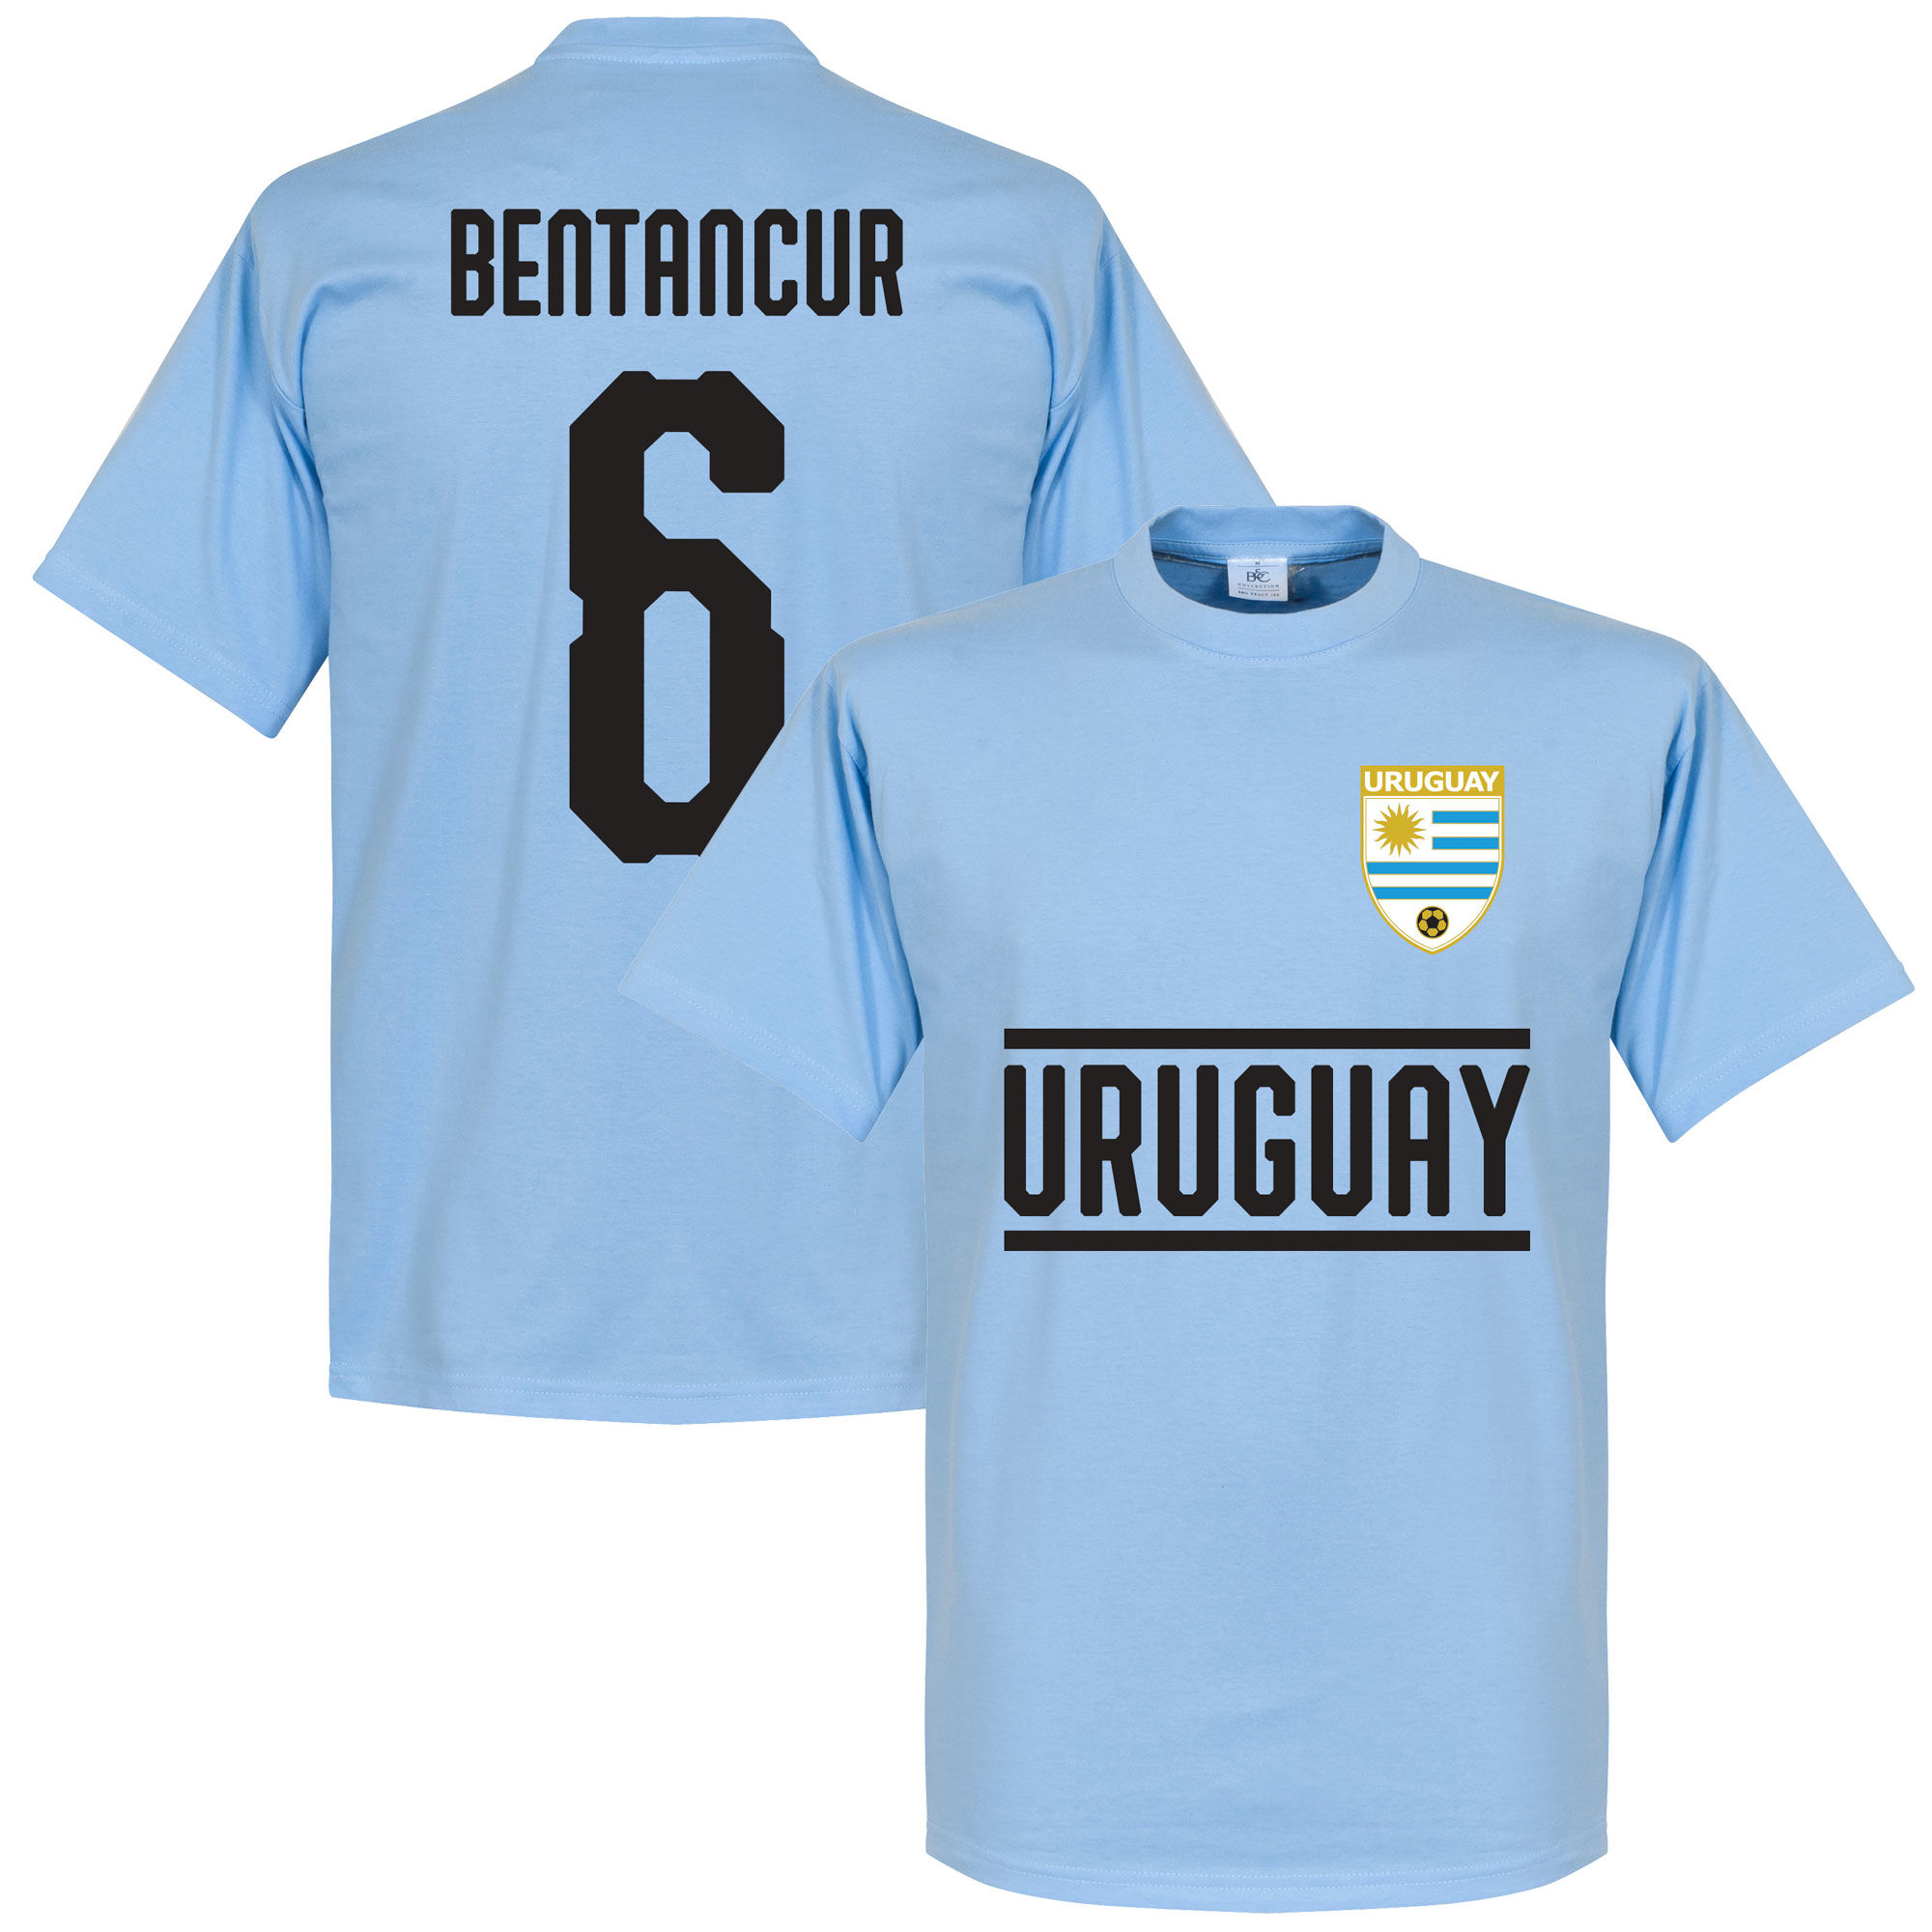 Uruguay - Tričko - číslo 6, Rodrigo Bentancur, modré